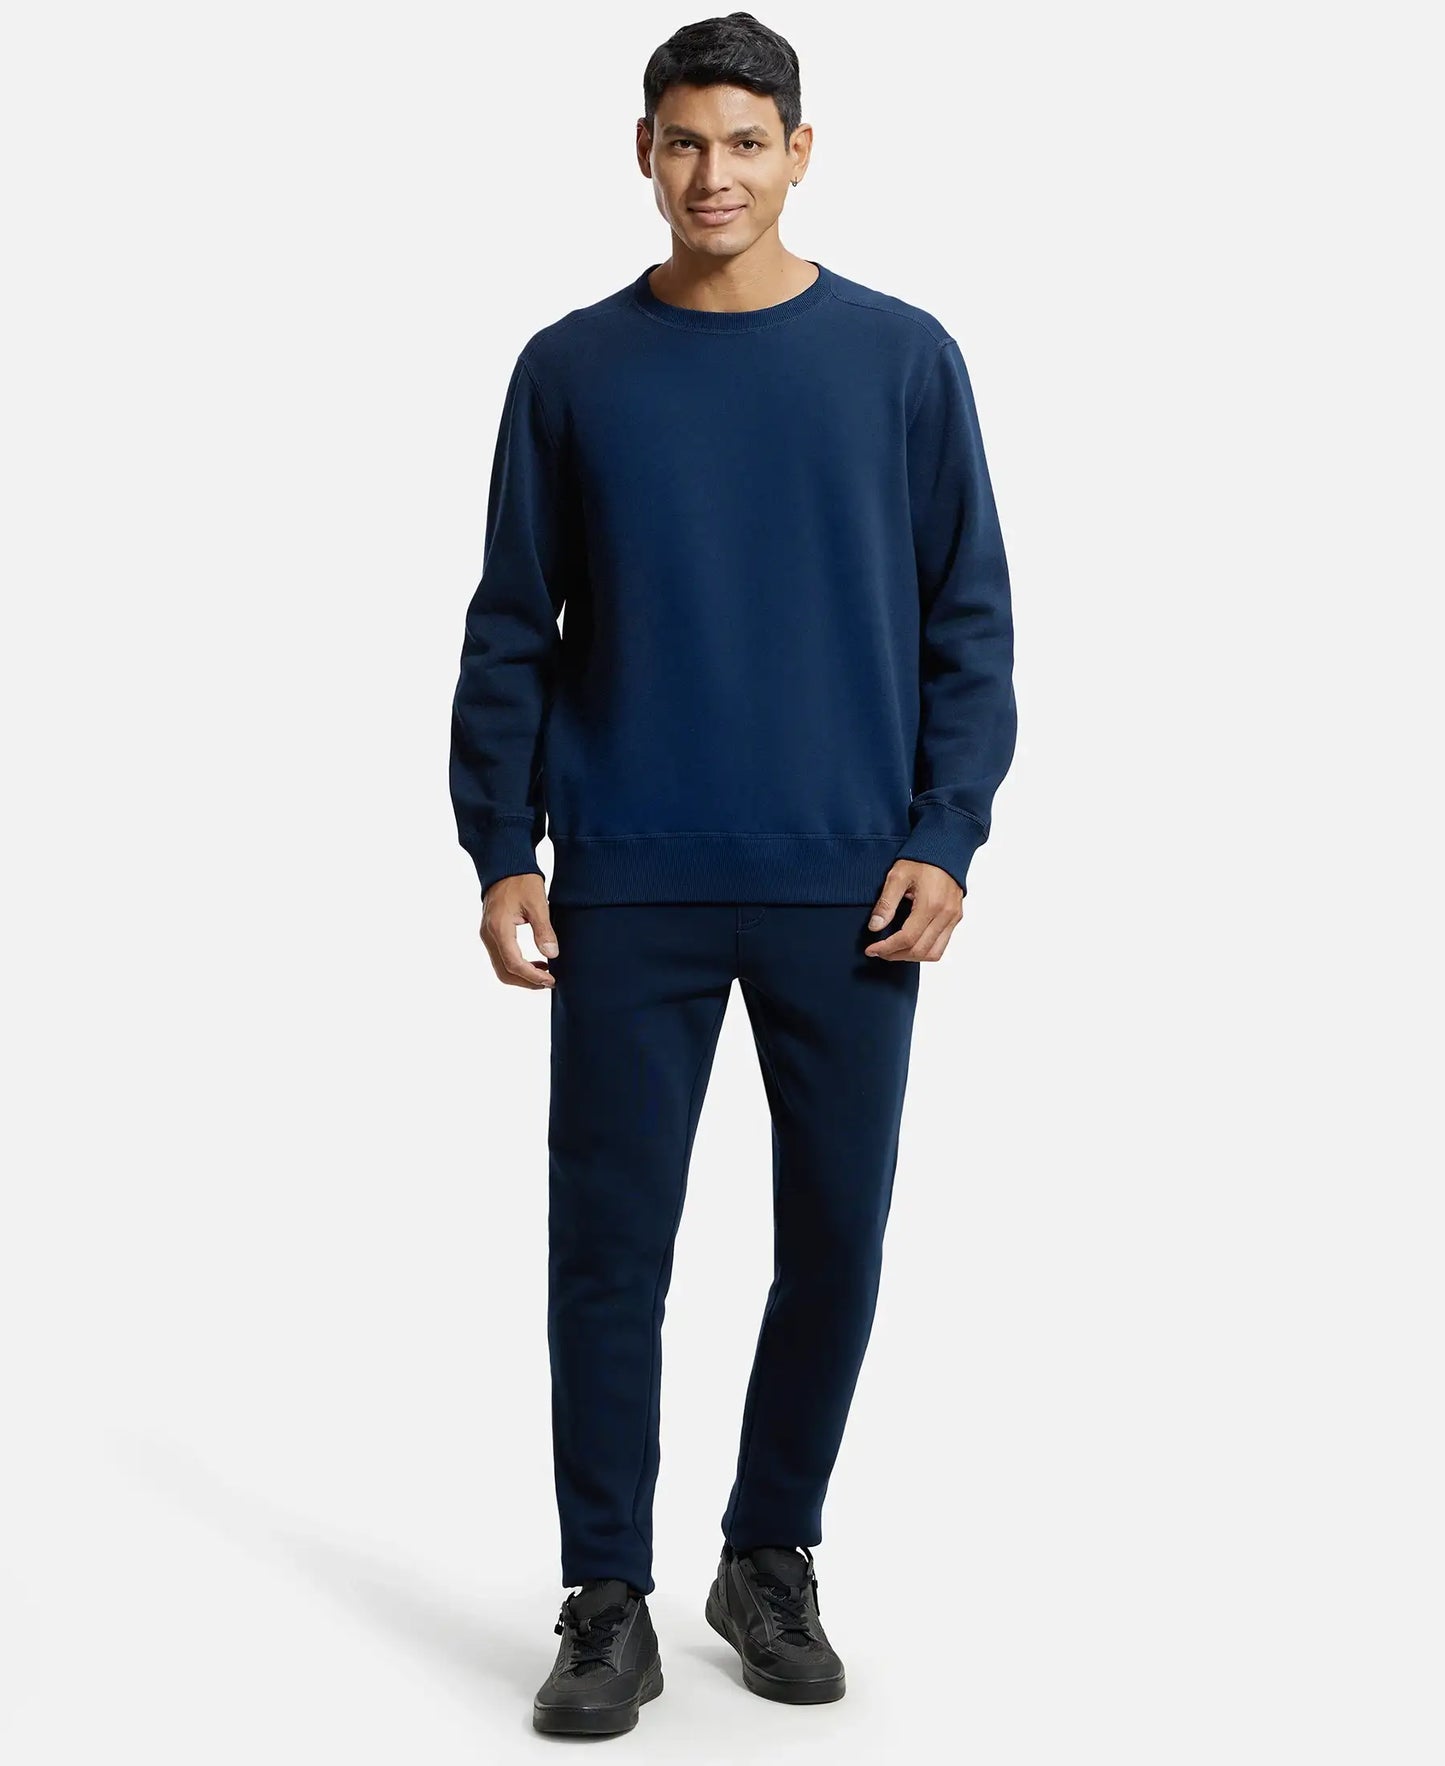 Super Combed Cotton Rich Fleece Sweatshirt with StayWarm Technology - Navy-4